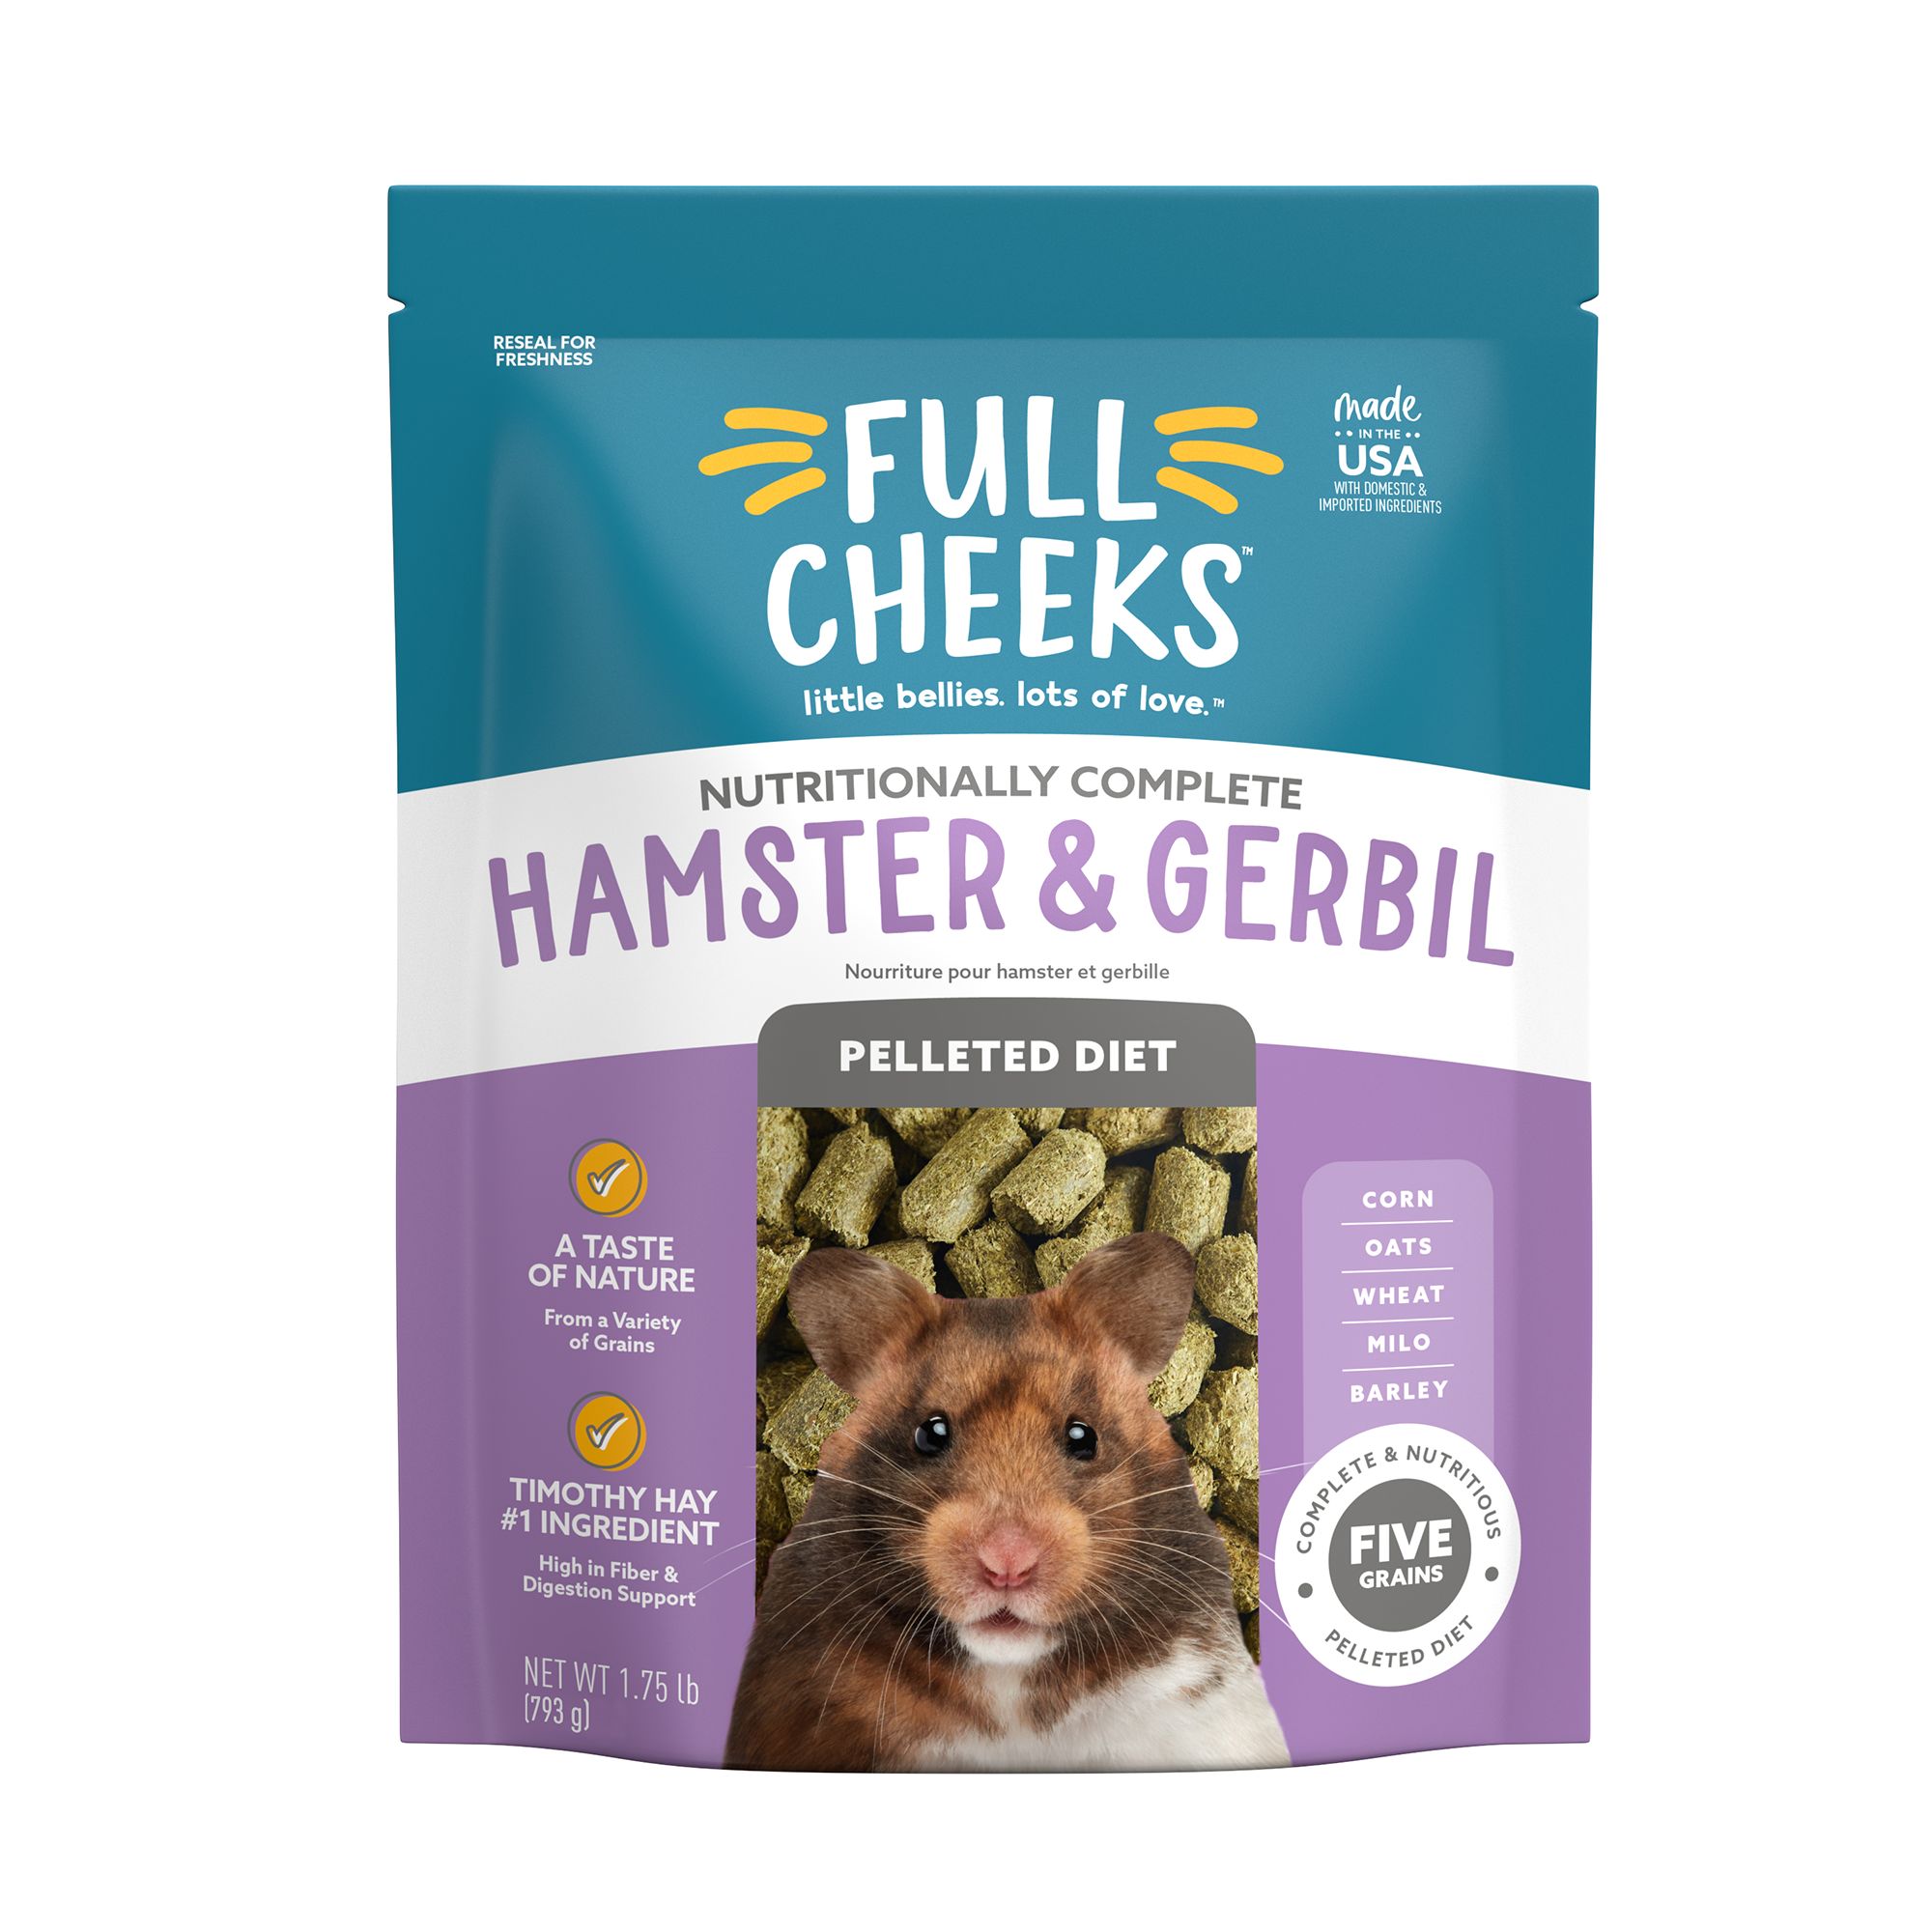 Full Cheeks Hamster & Gerbil Pellet Diet